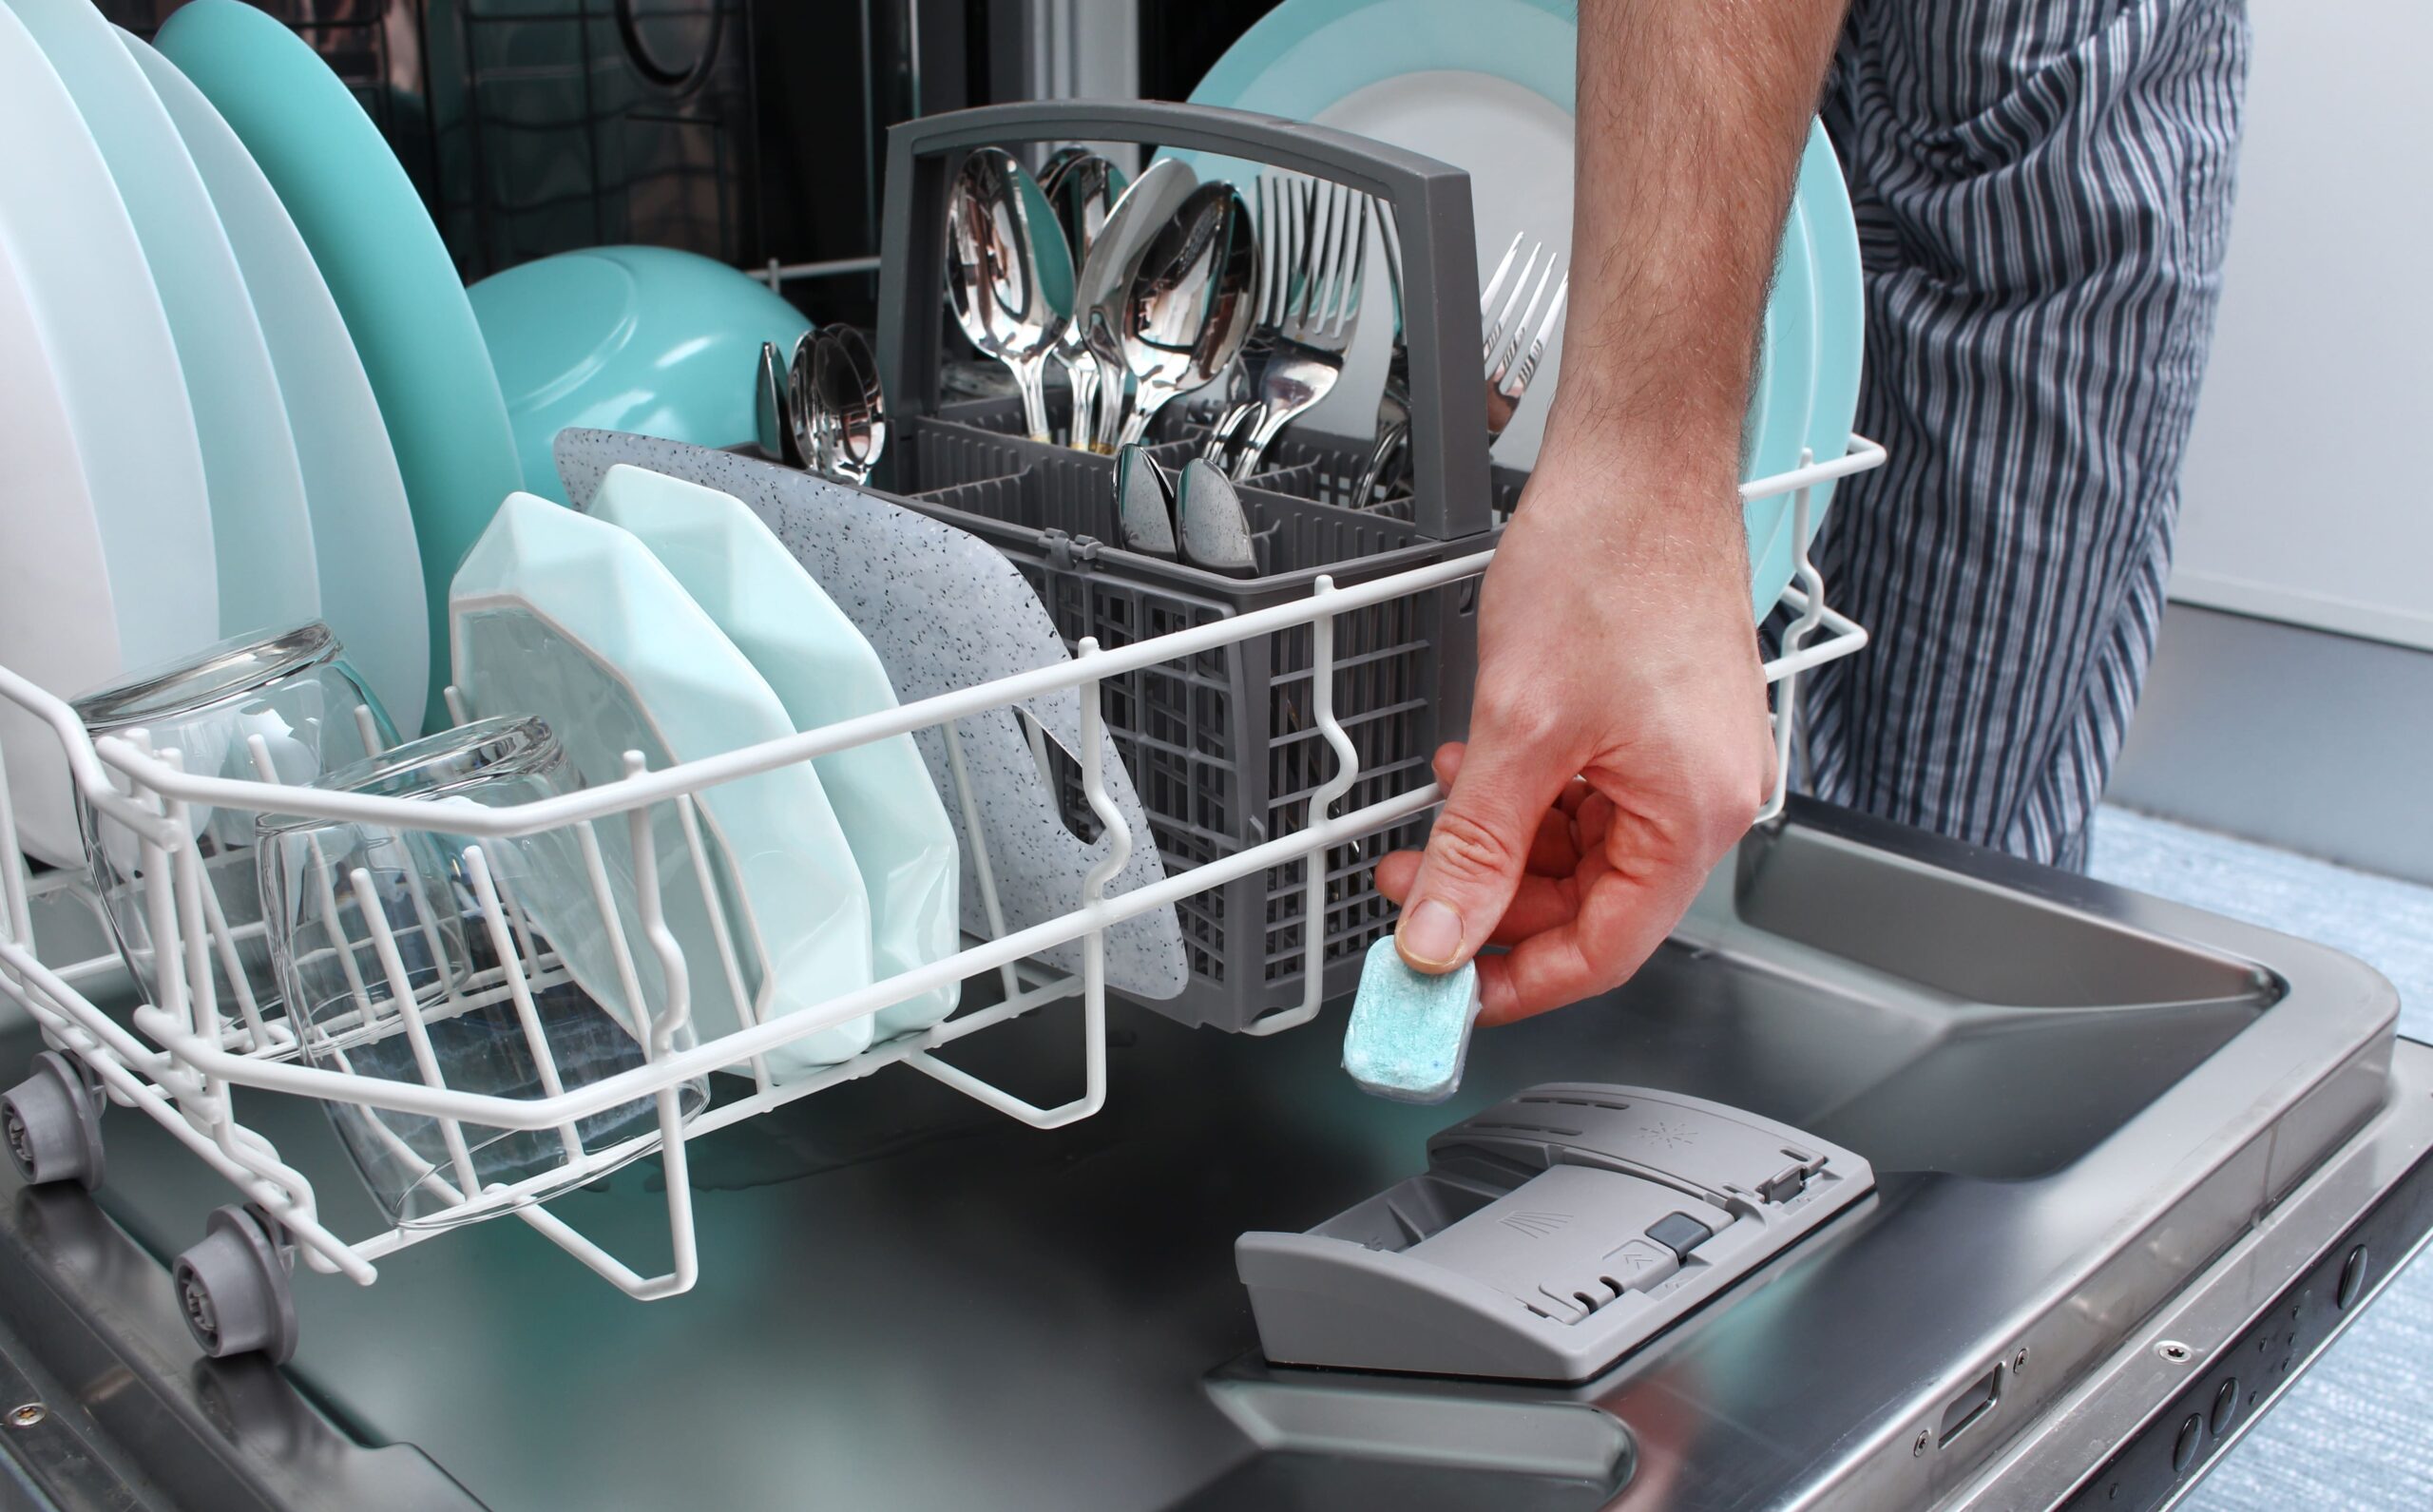 How To Use Hotpoint Dishwasher